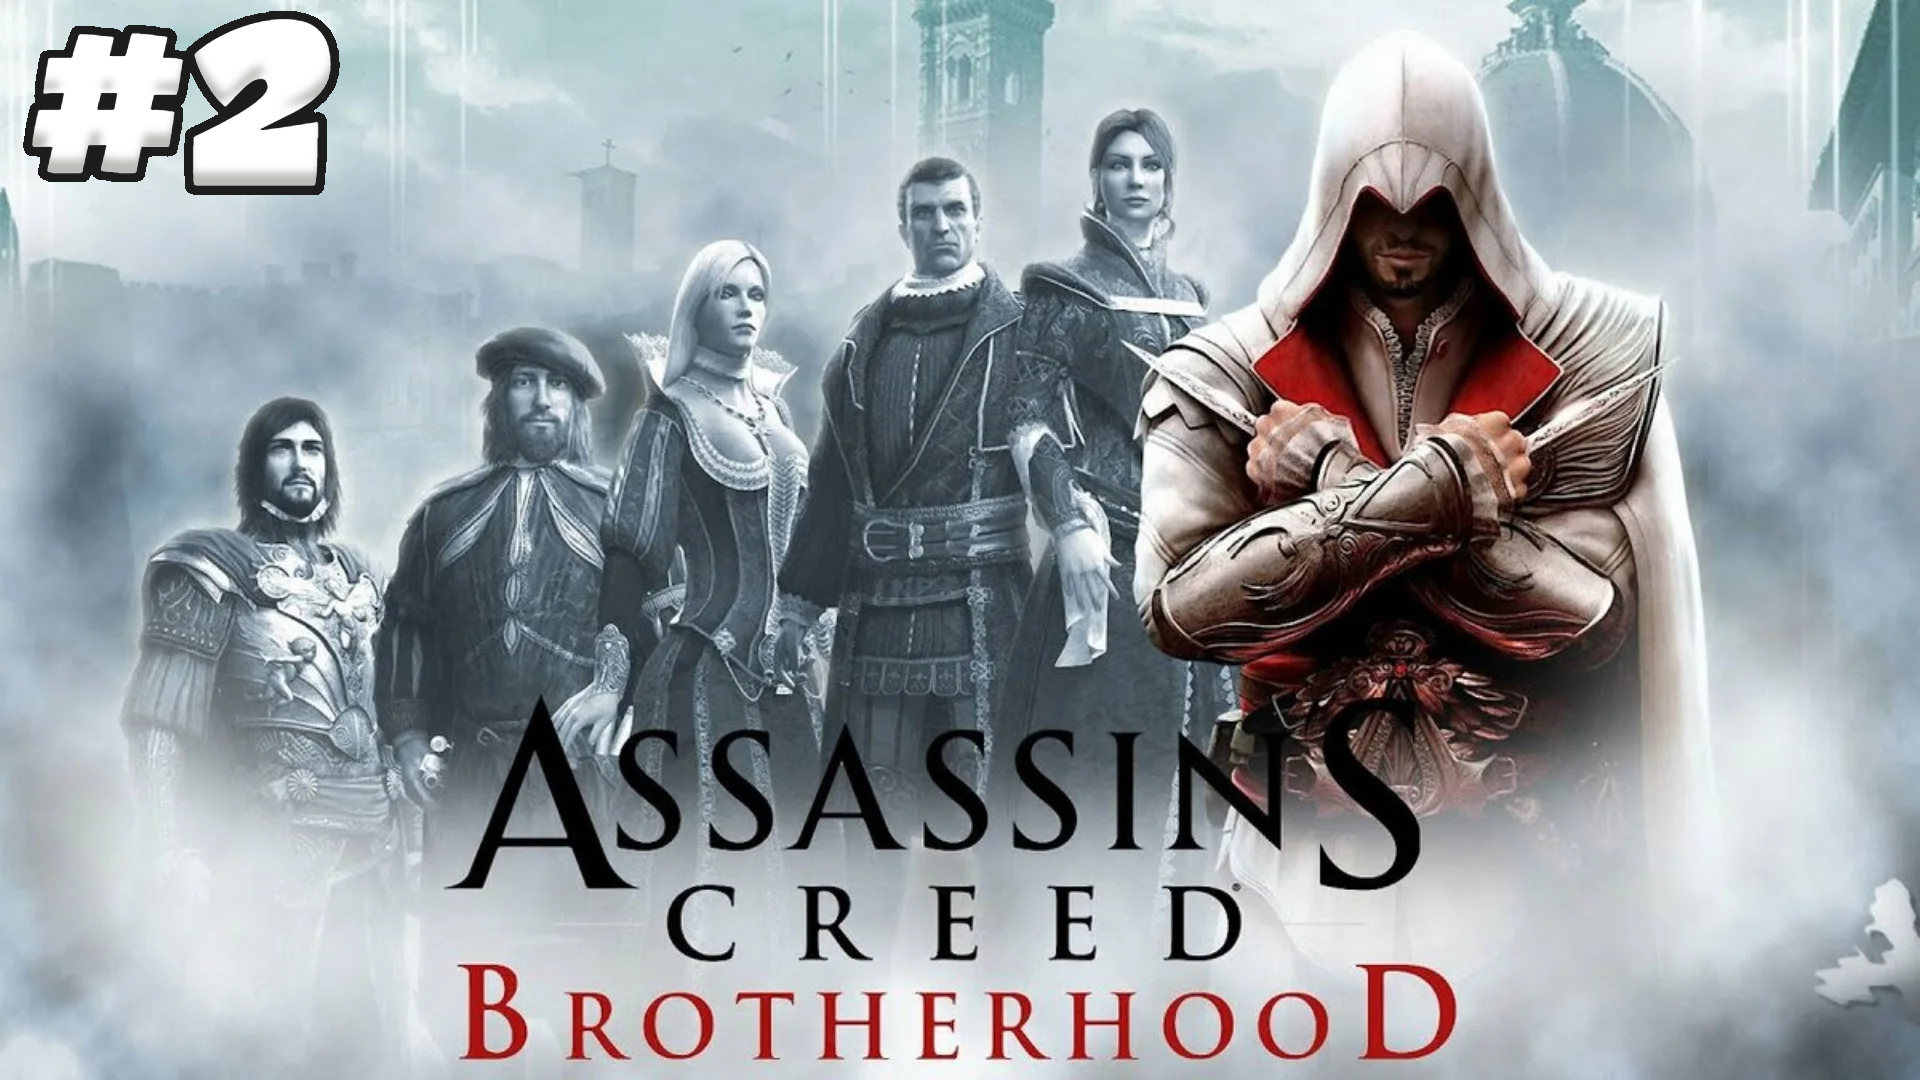 Brotherhood ii. Assassin's Creed. Братство. Ассасин Крид 2 братство крови обложка. Братство крови ассасин 3. Assassin's Creed 2 Brotherhood poster.